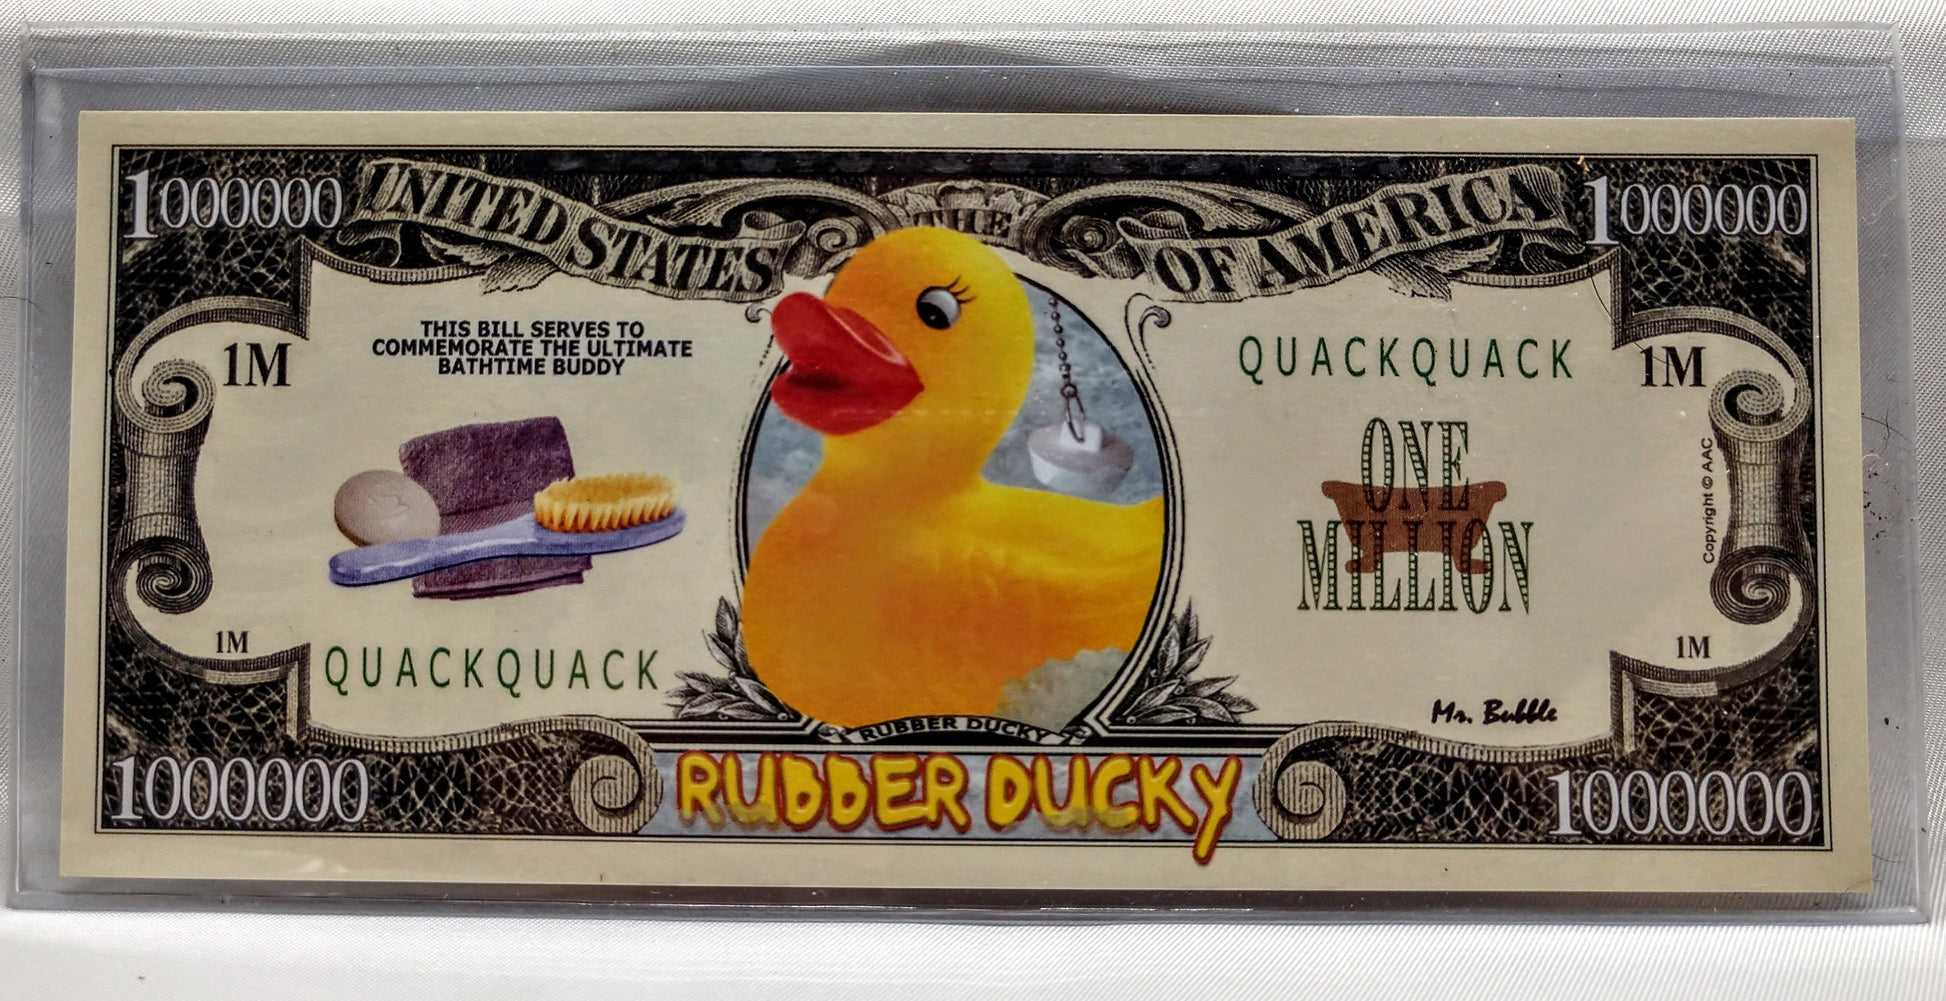 Million Ducks Novelty Dollar Bills